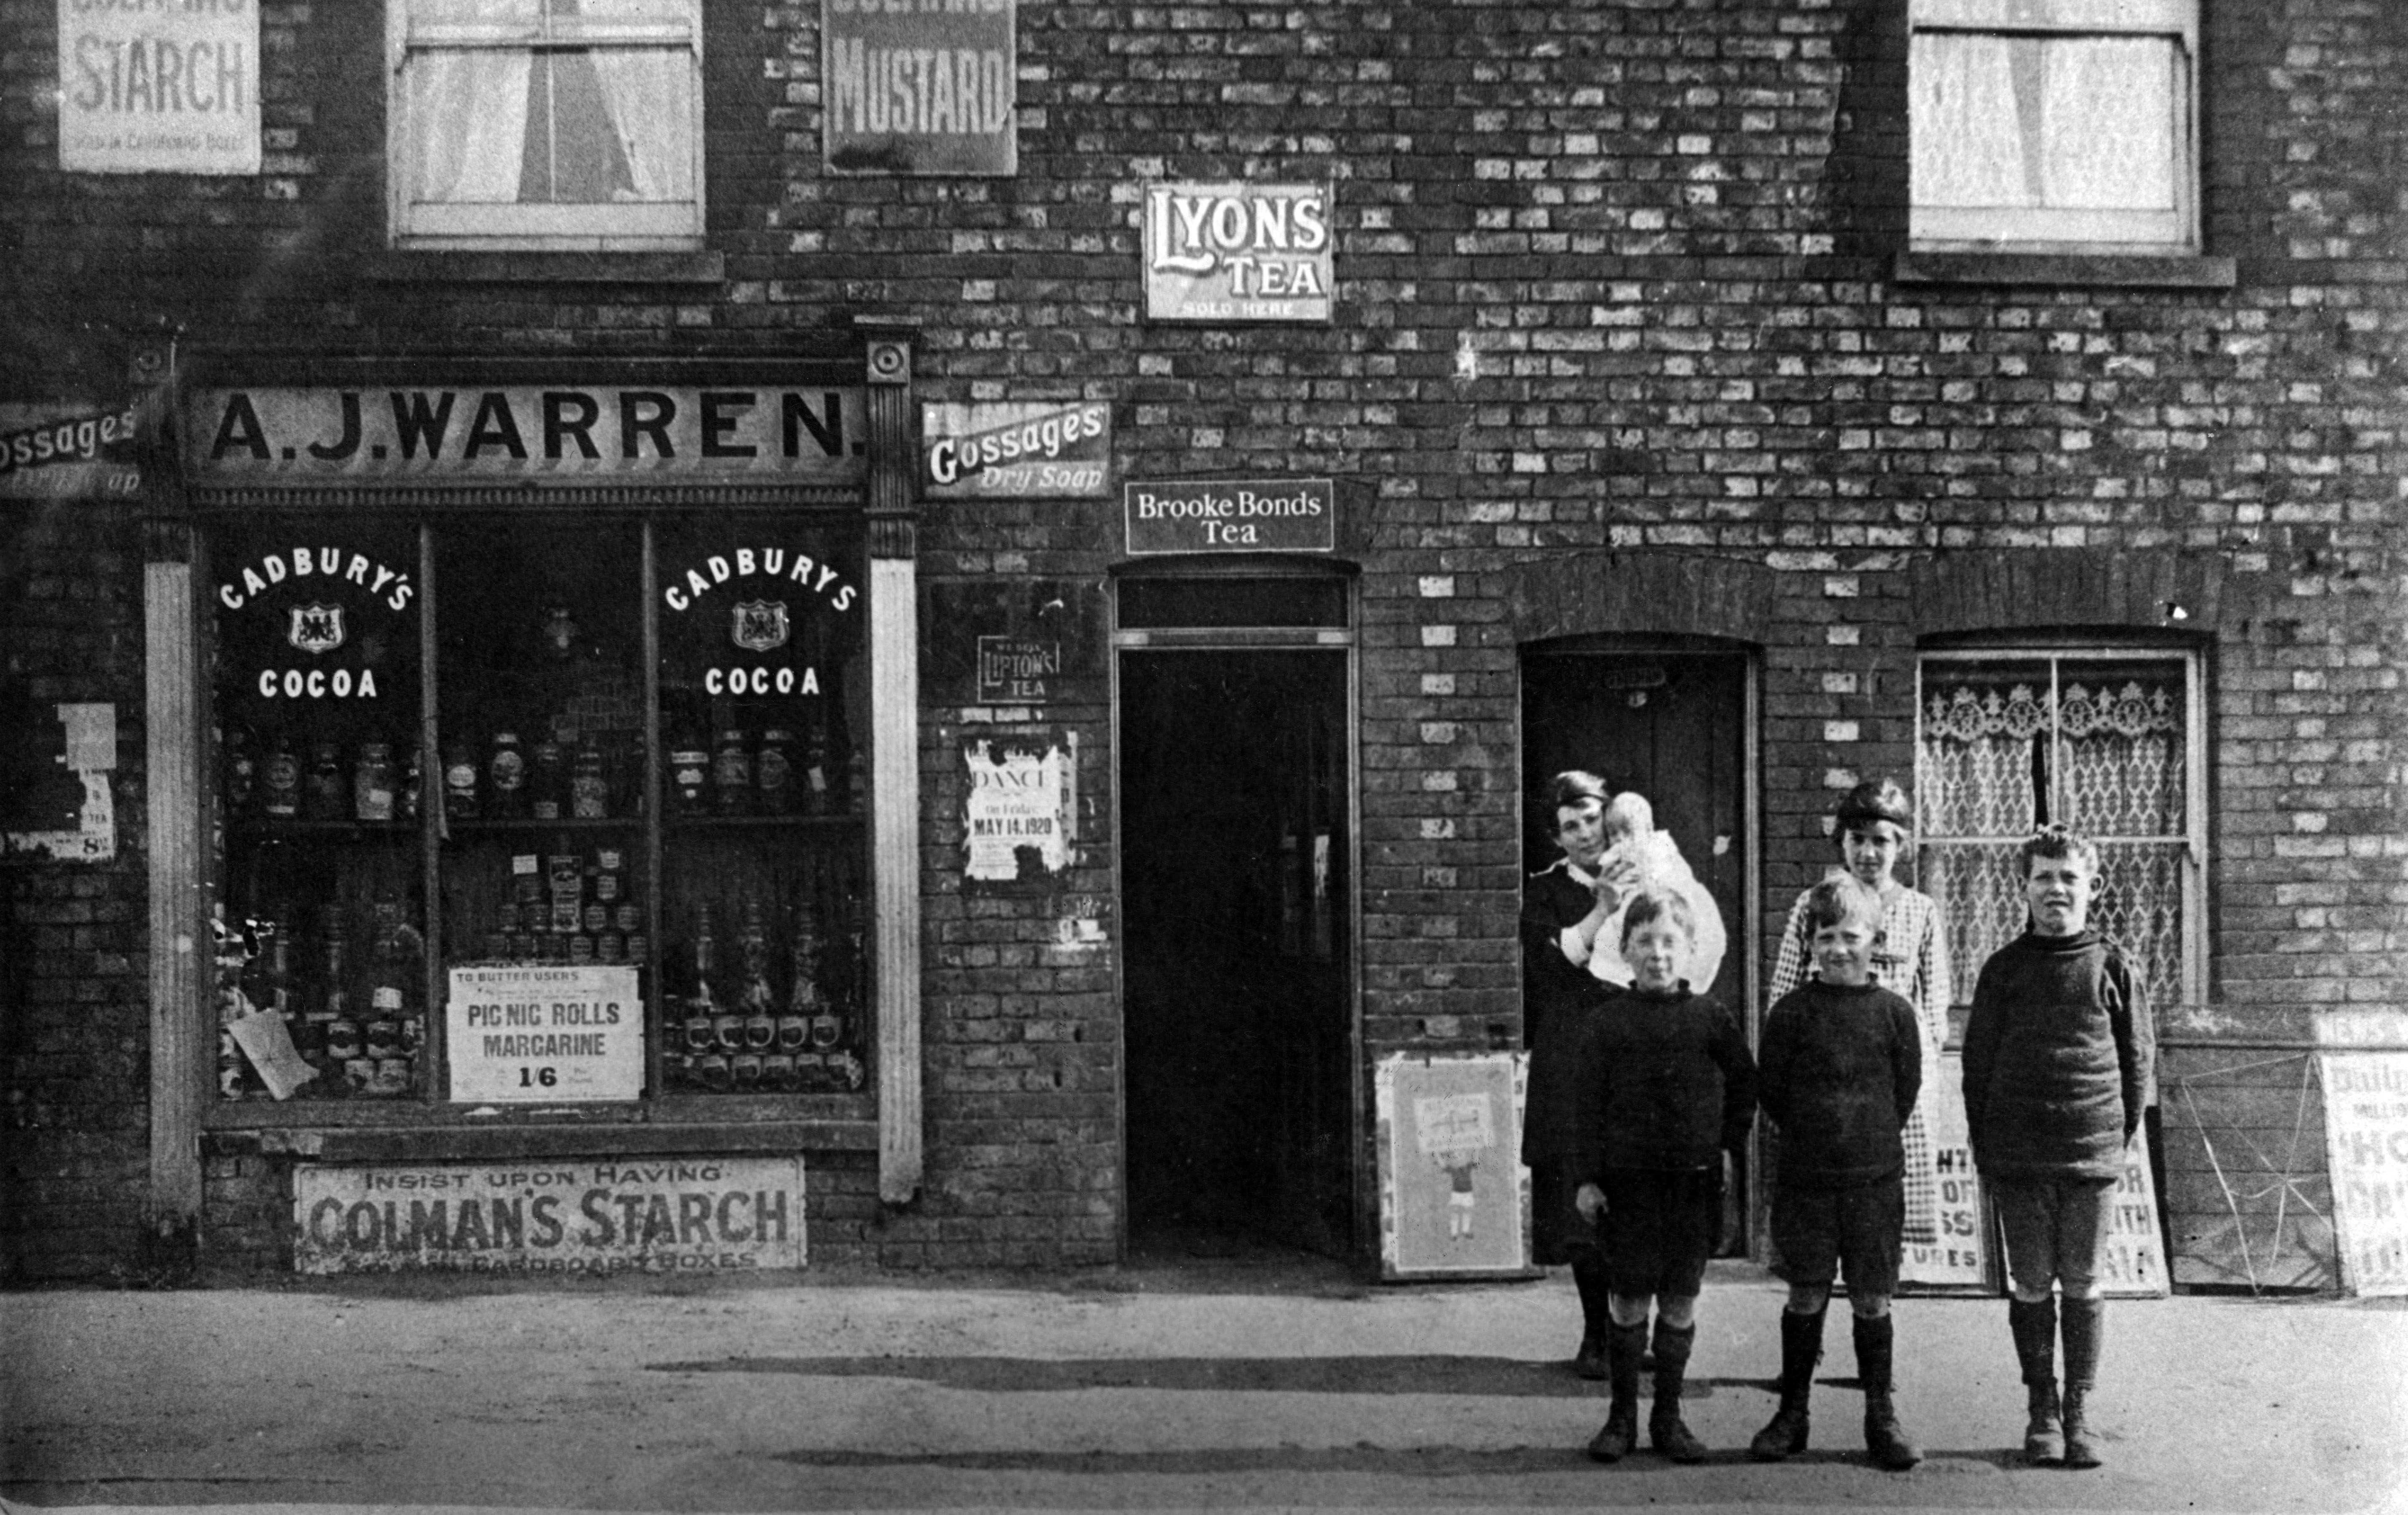 A J Warrens shop in Otford, Kent, 1905.